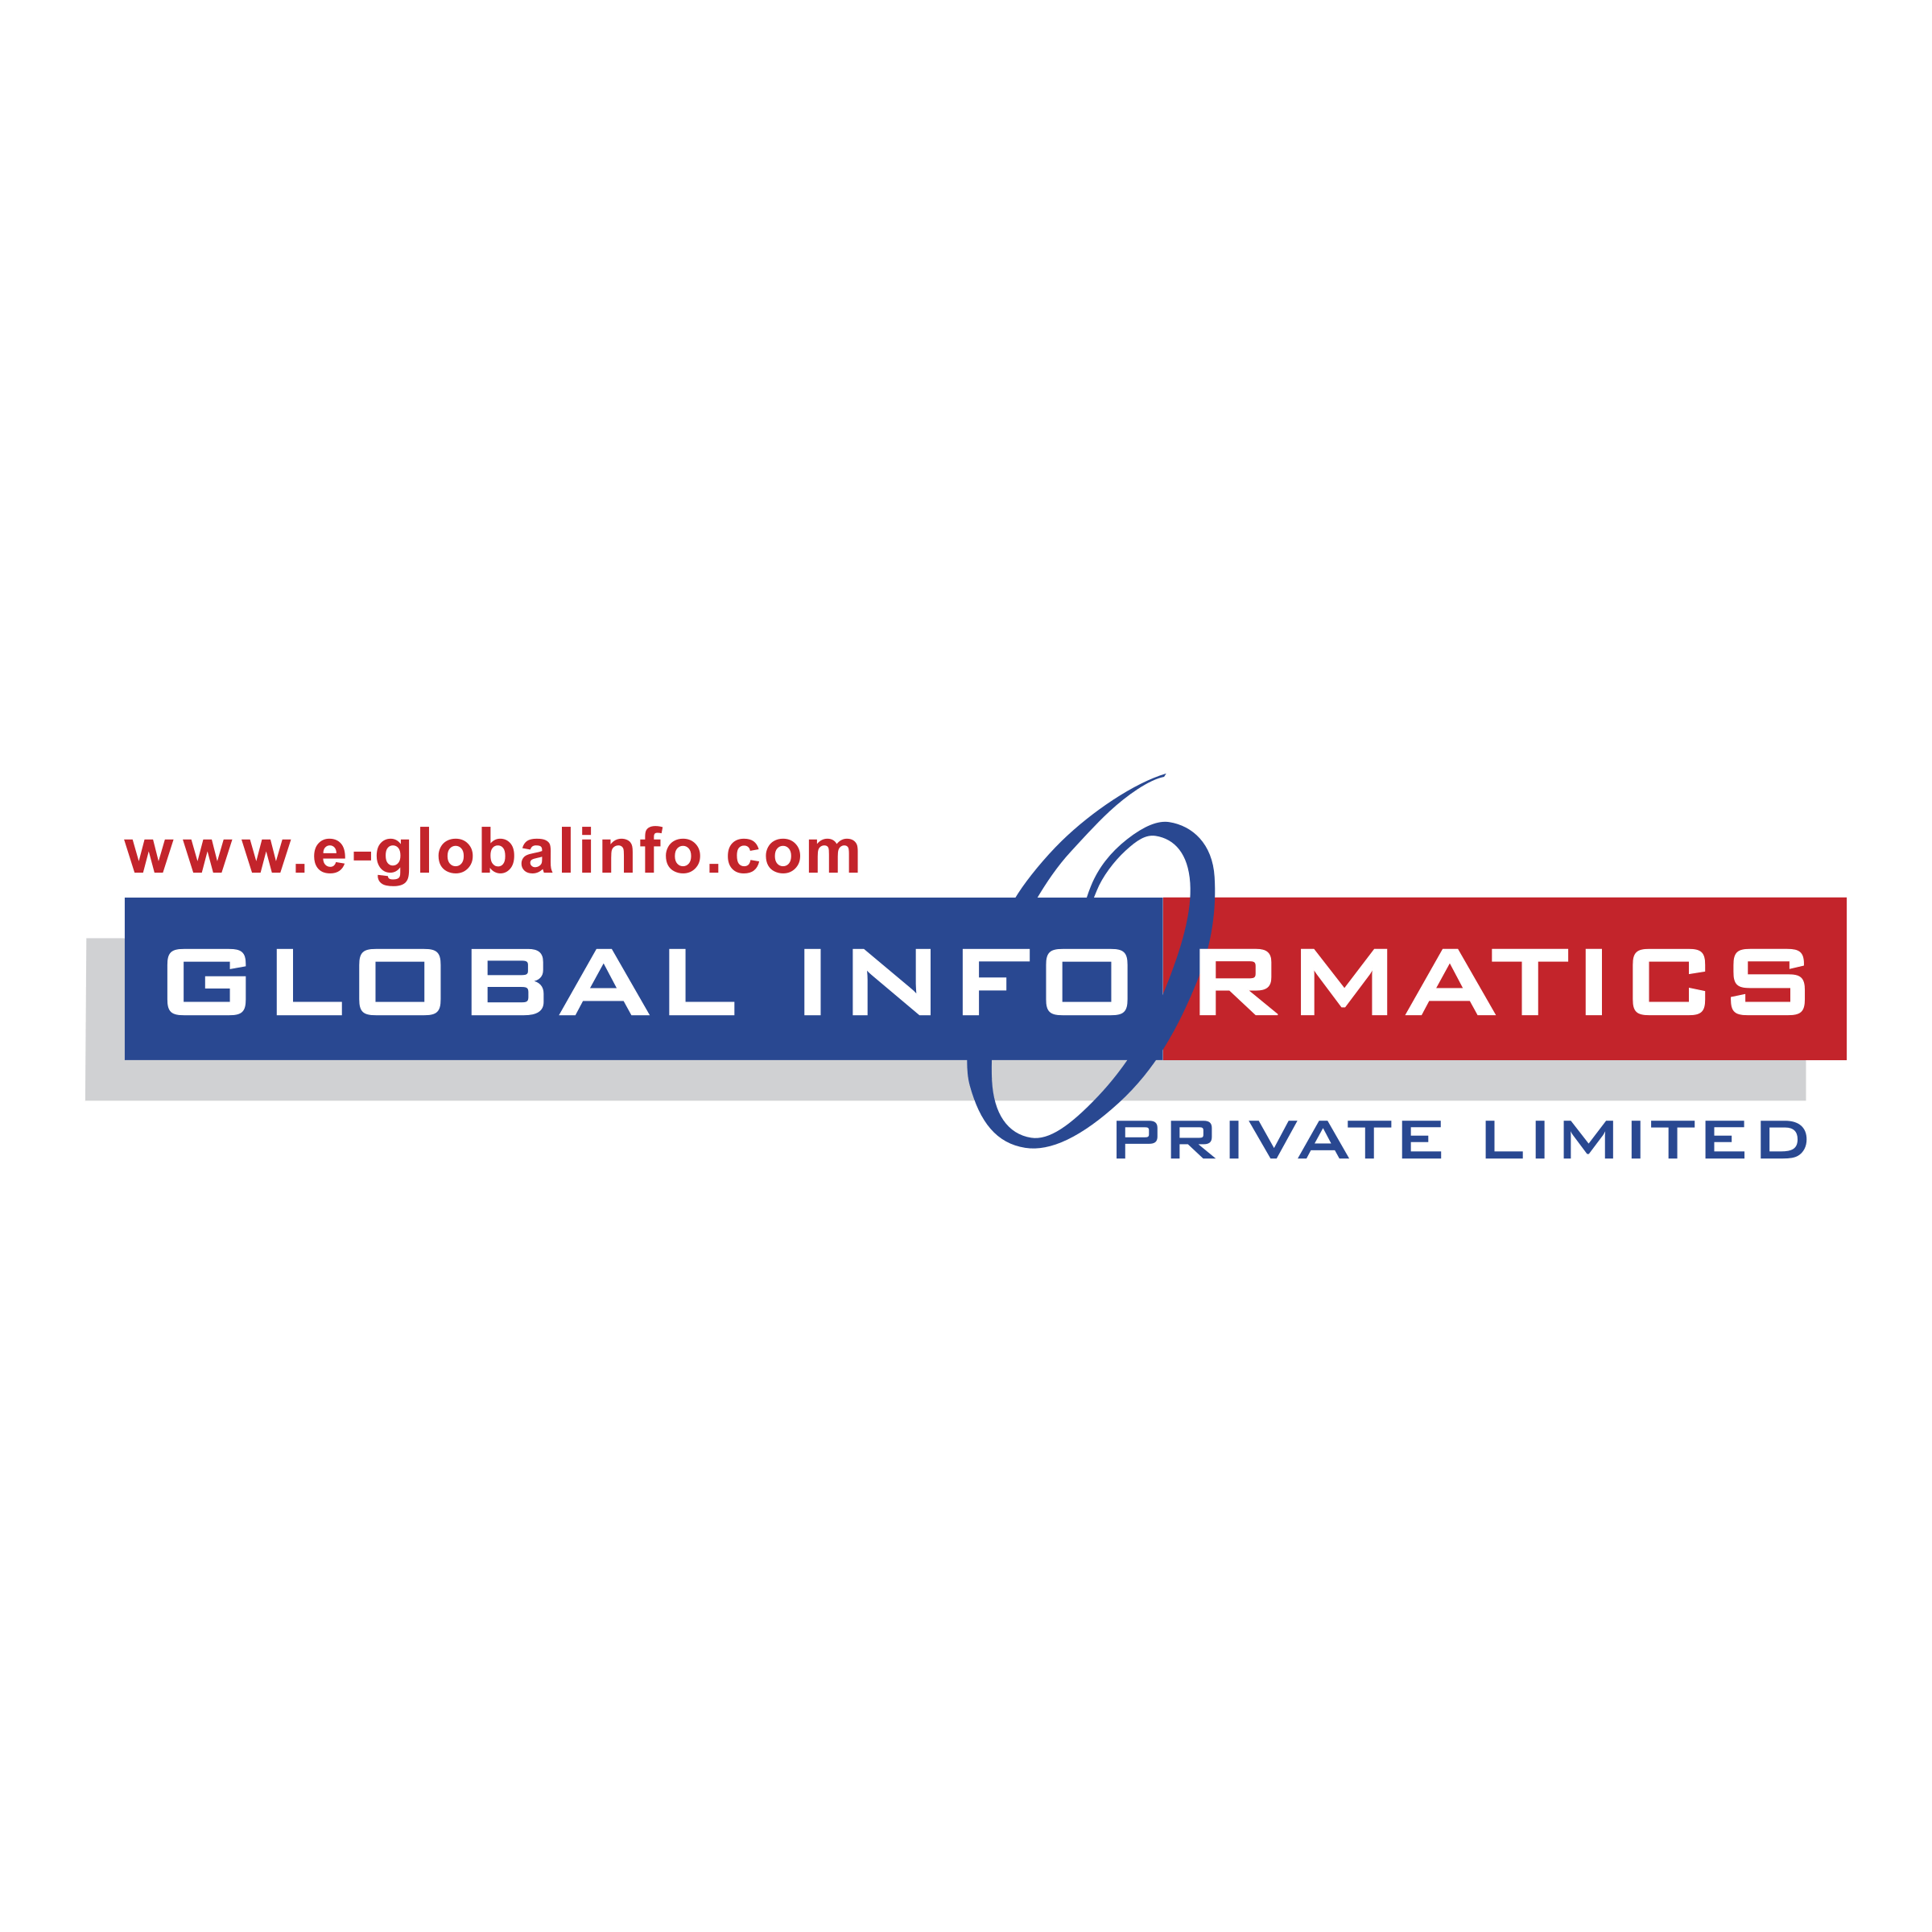 Informatics Logo - Global Informatics Pvt Ltd Logo PNG Transparent & SVG Vector